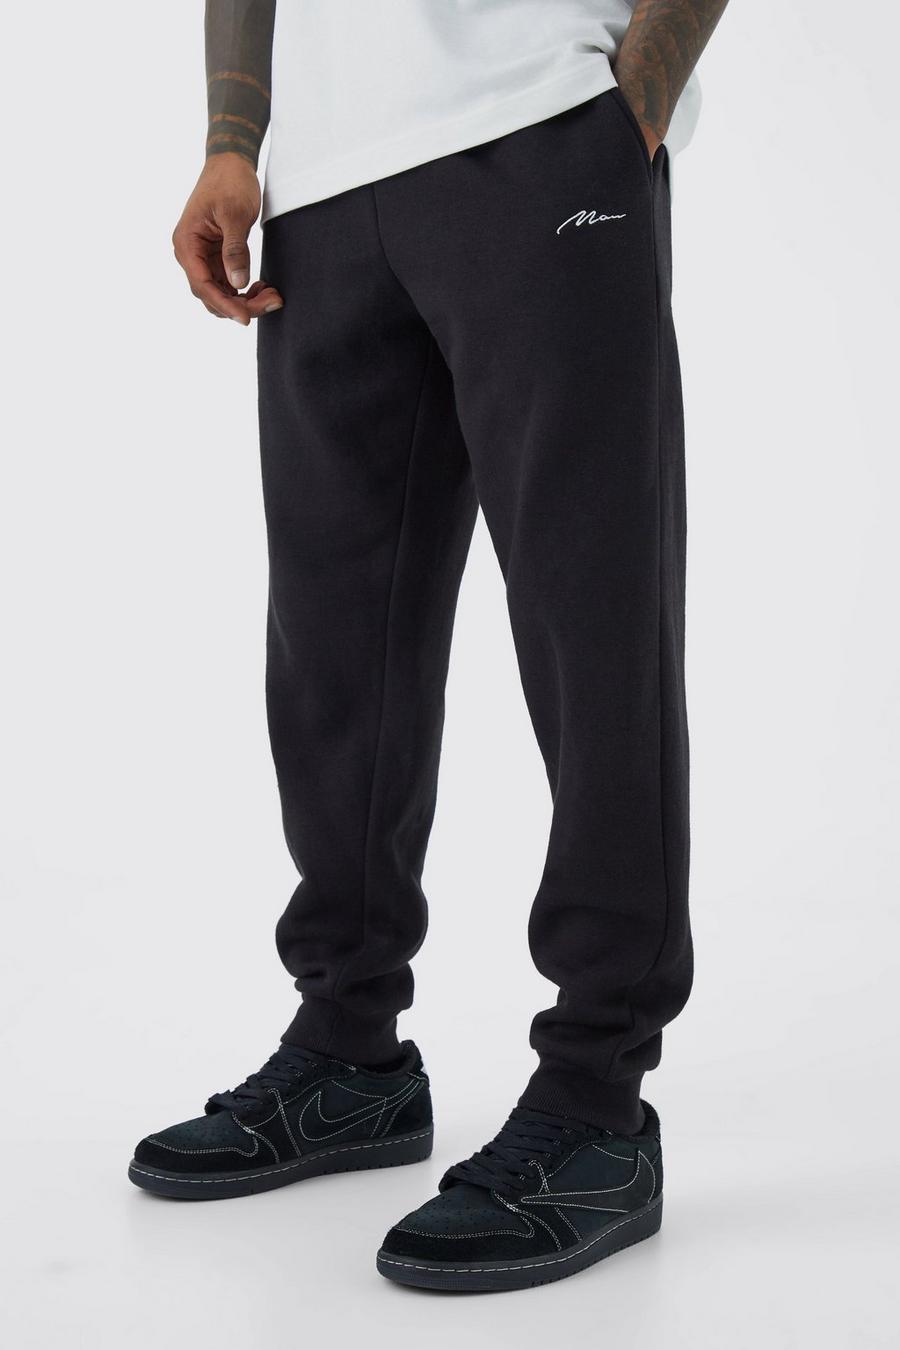 Pantaloni tuta Regular Fit con firma Man, Black nero